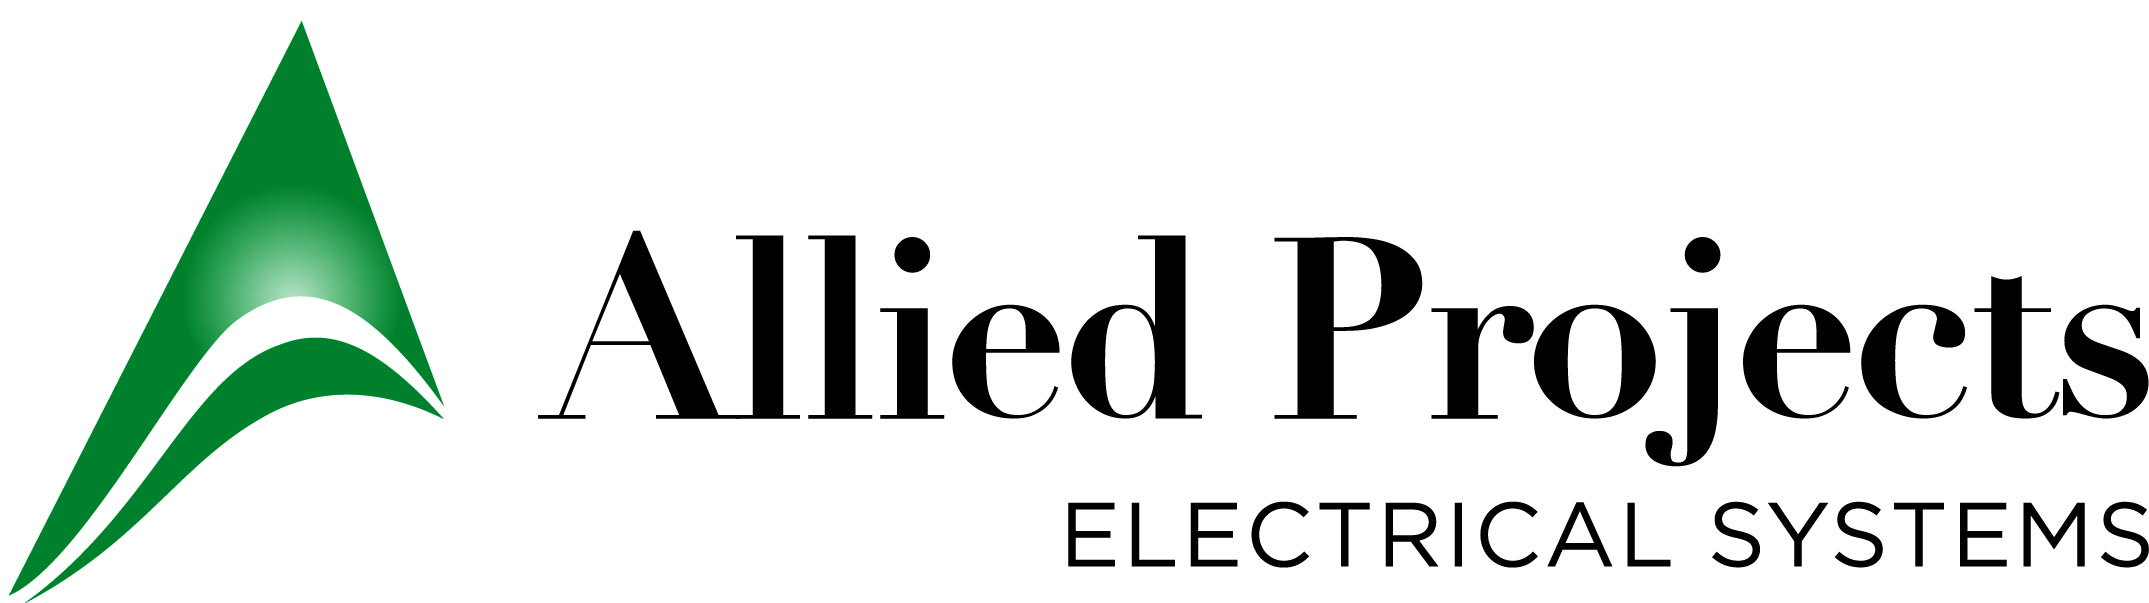 Allied Projects Ltd.